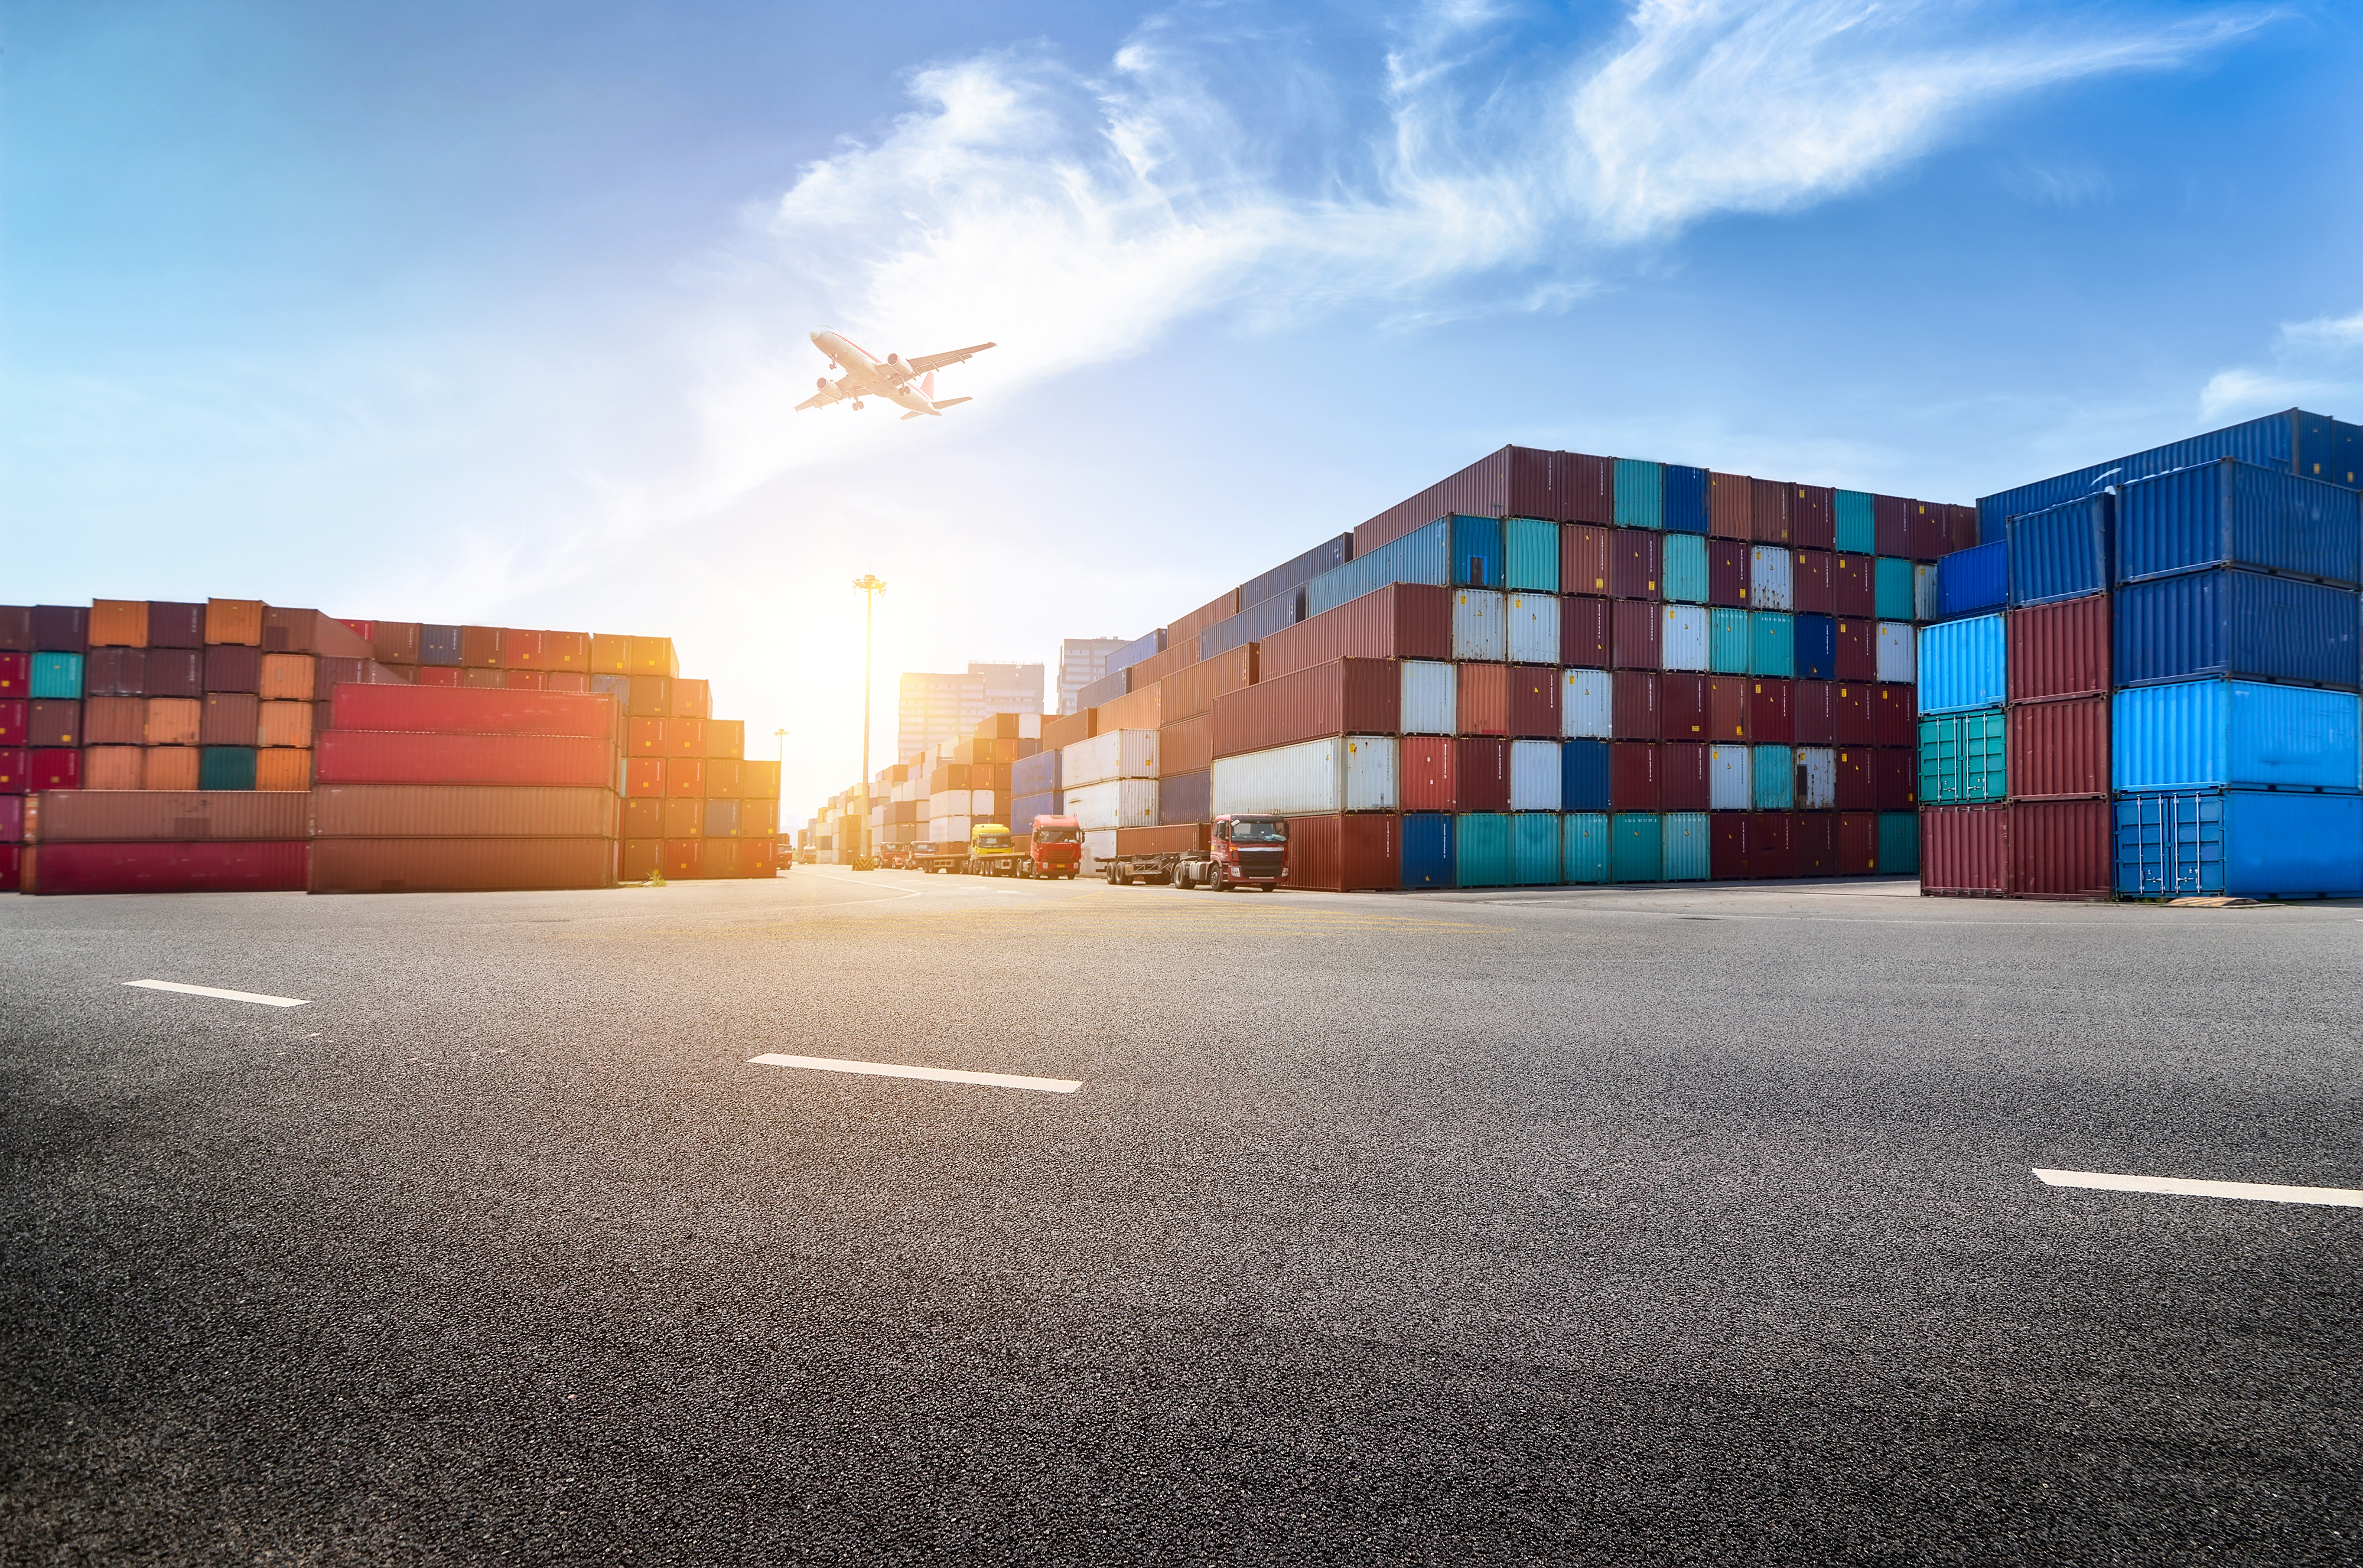 Freight forwarding & logistics